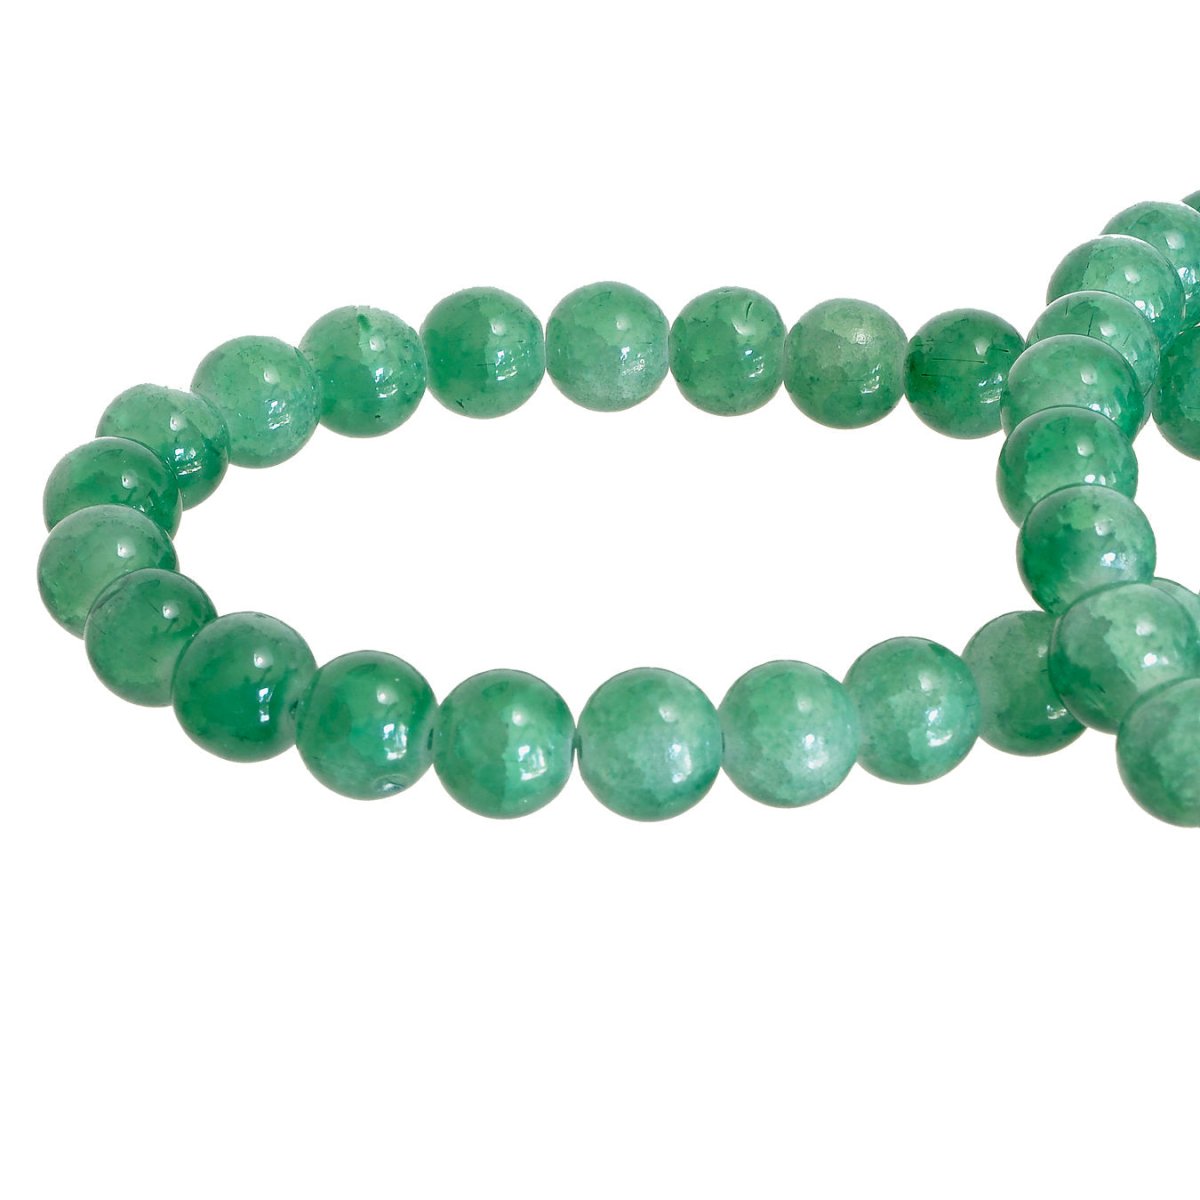 Shamrock Leaf Green Round Glass Beads, Size 6mm, 8mm, 10mm Hole size 1.2 mm, Bead Strand, Bead Making, Jewelry Making, Necklace Bracelet DIY, Harris1952 - DLUXCA